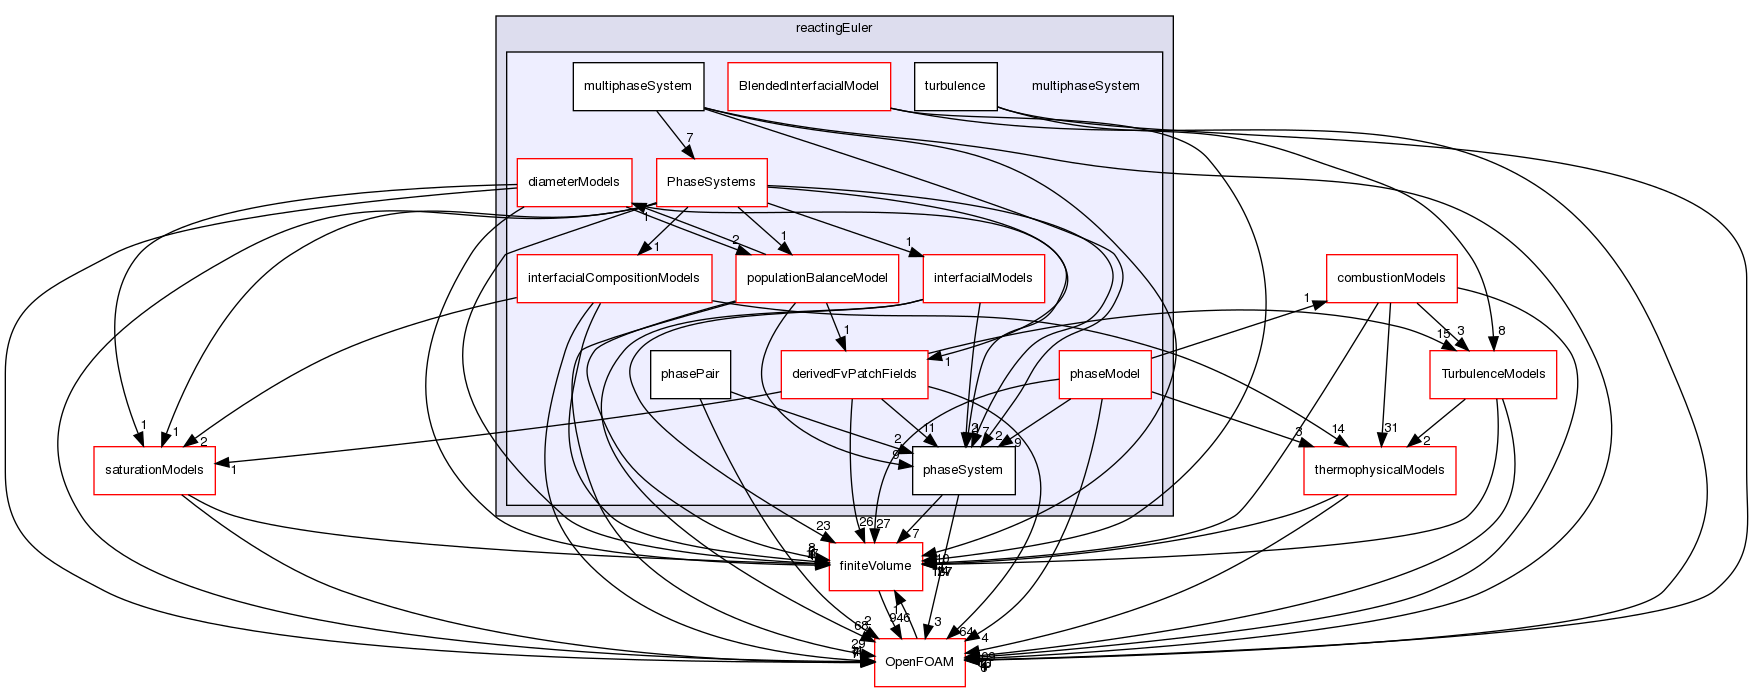 src/phaseSystemModels/reactingEuler/multiphaseSystem